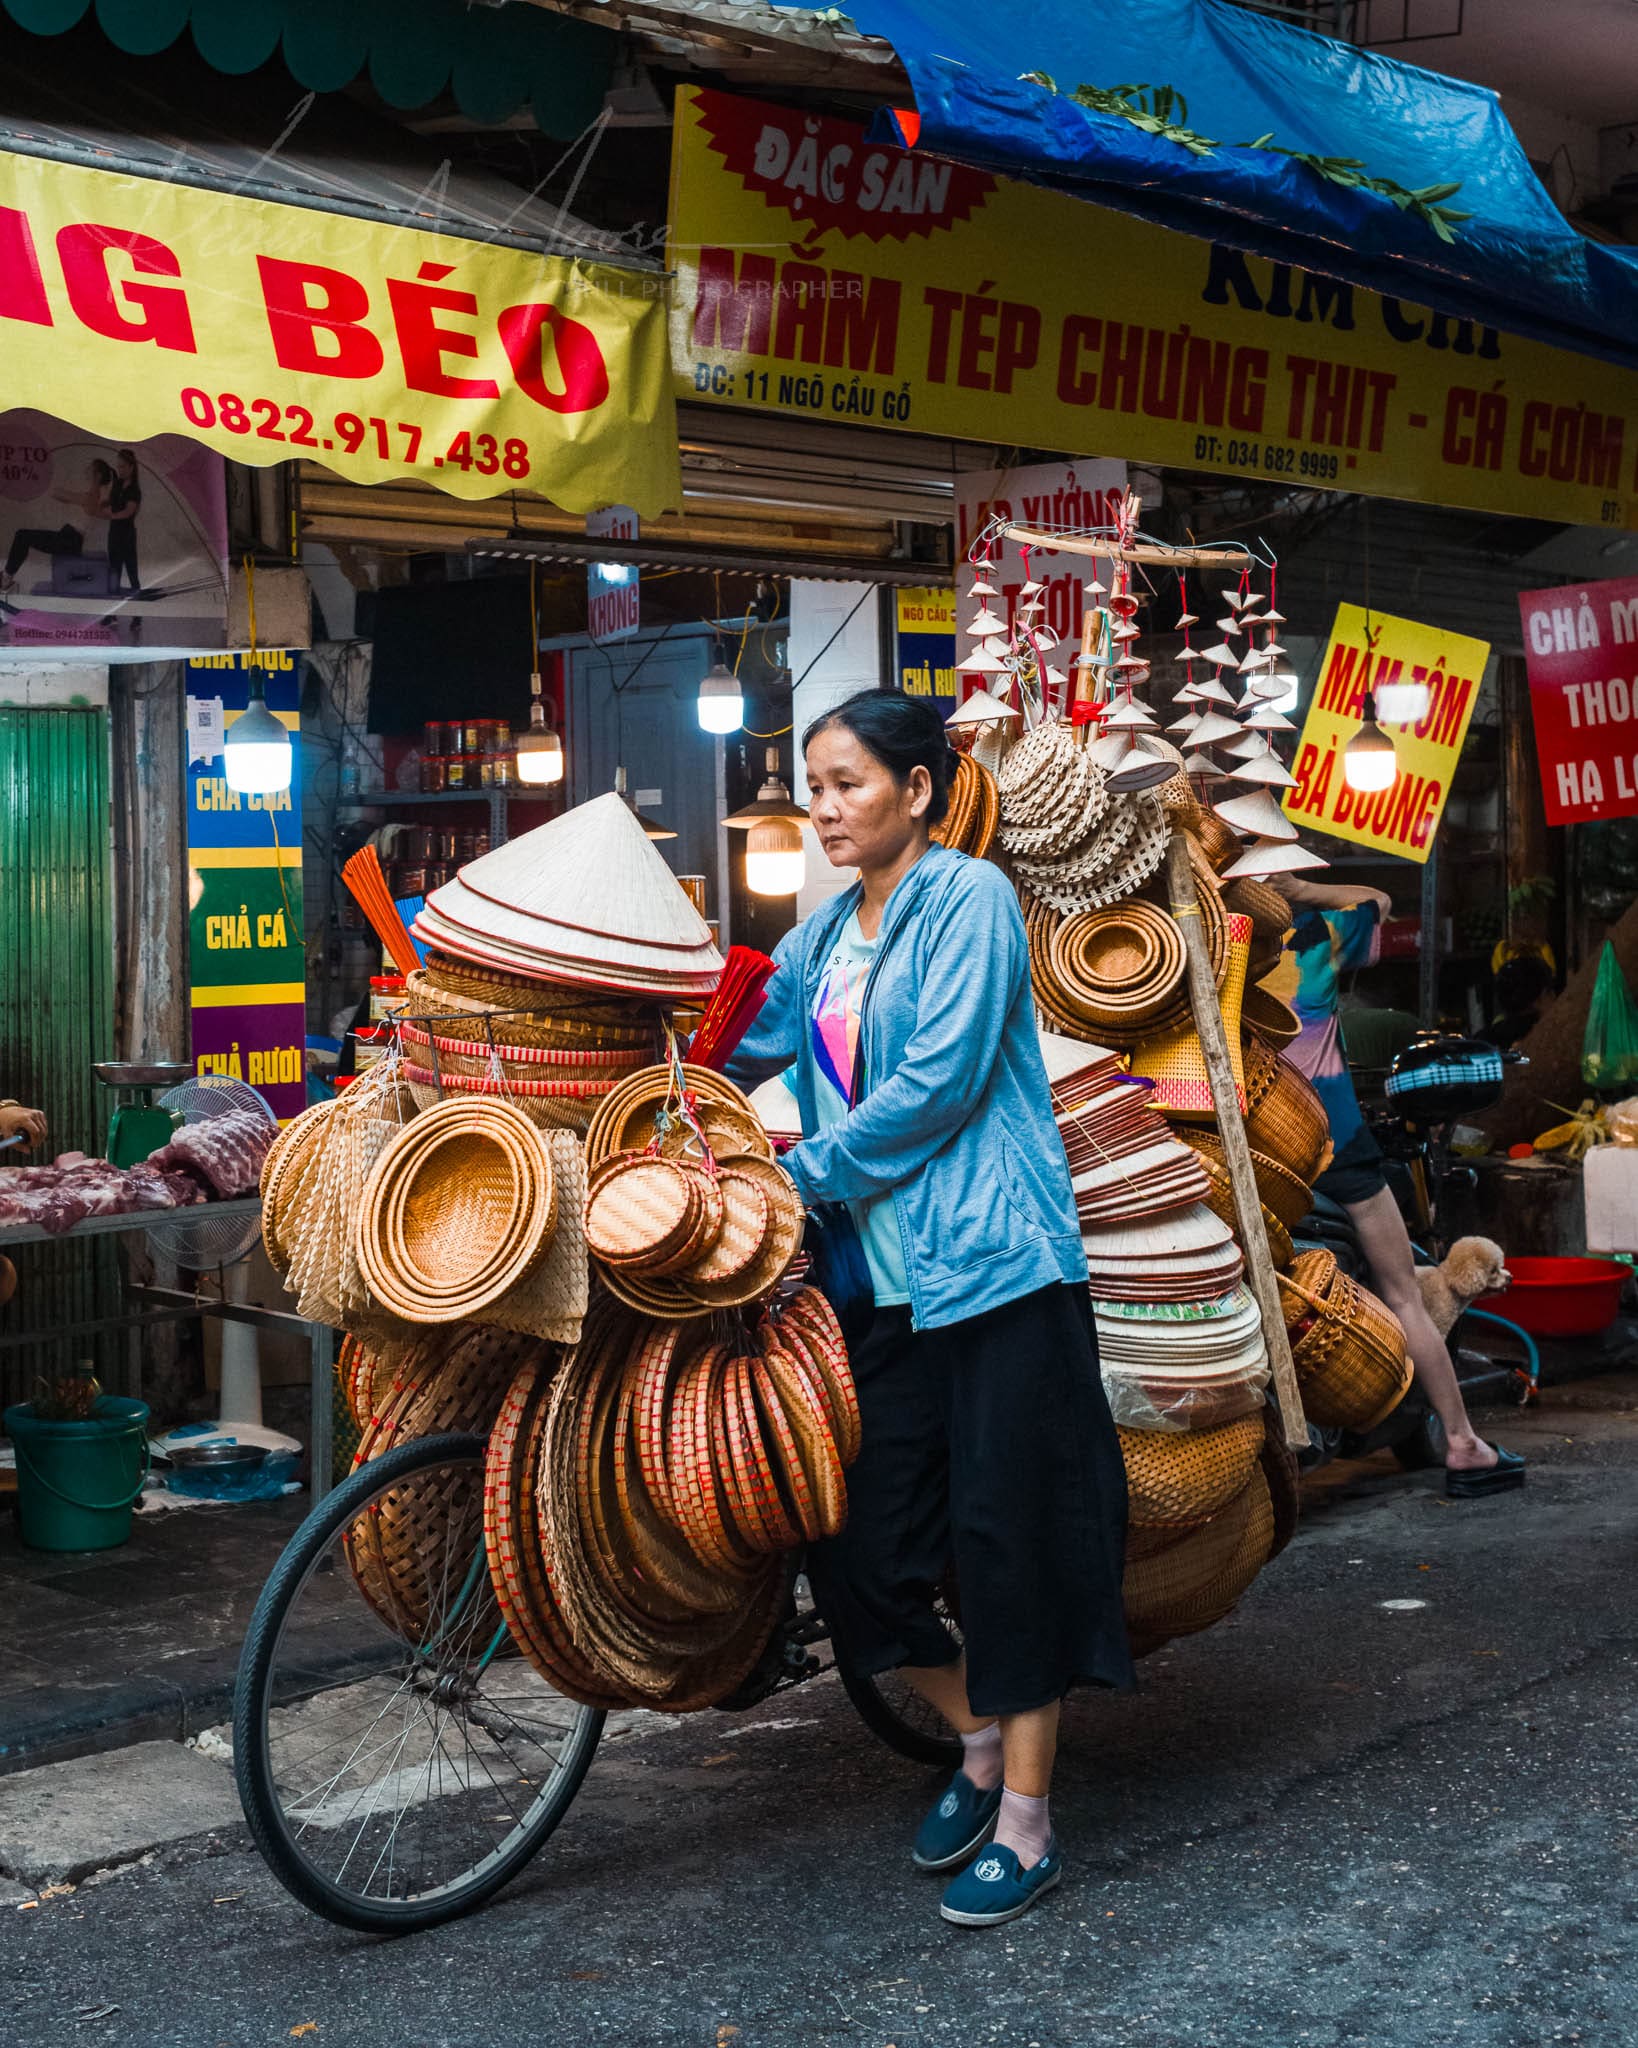  Hanoi market vendor with baskets on bicycle, showcasing traditional craftsmanship.